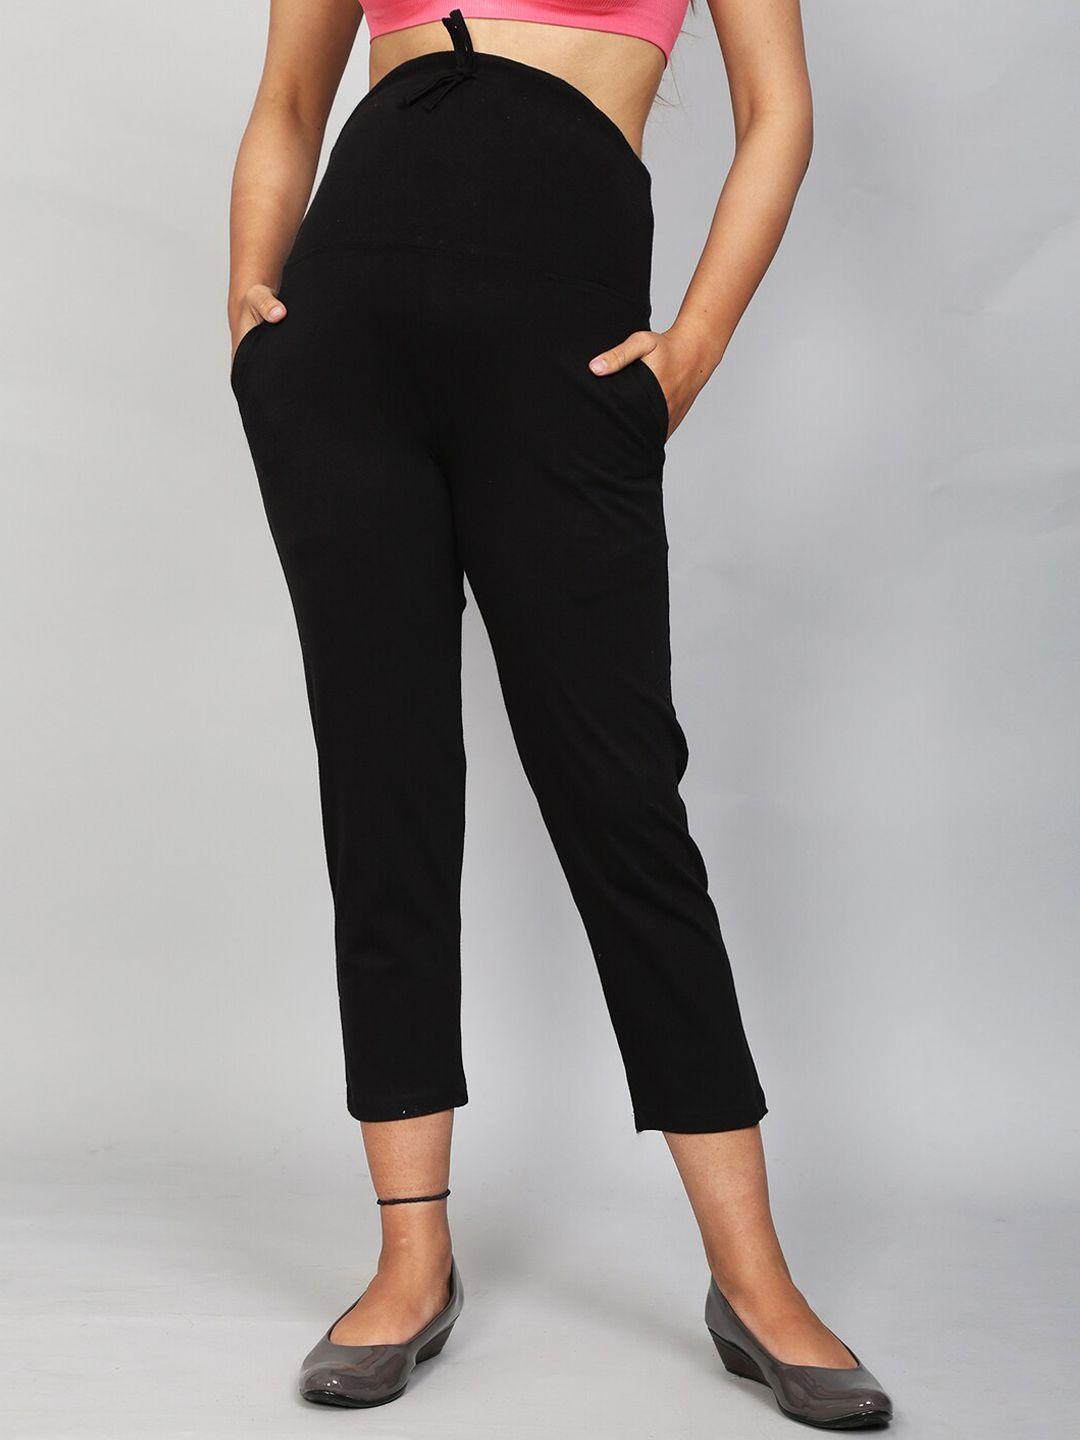 sillyboom women black solid three-fourth length maternity leggings